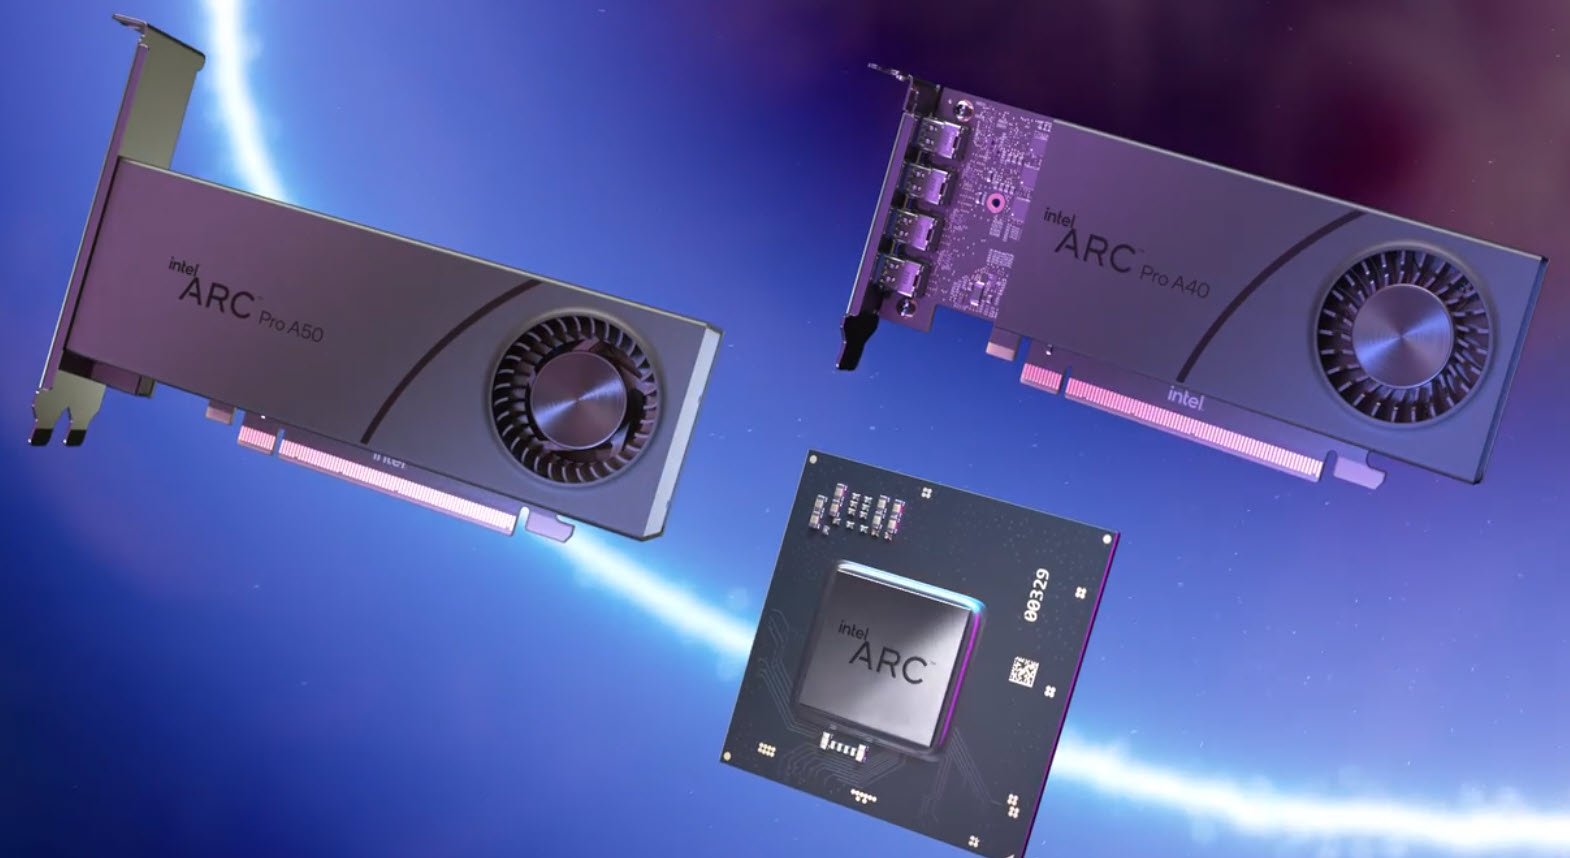 Intel Announces Intel Arc Pro A60 and Pro A60M GPUs